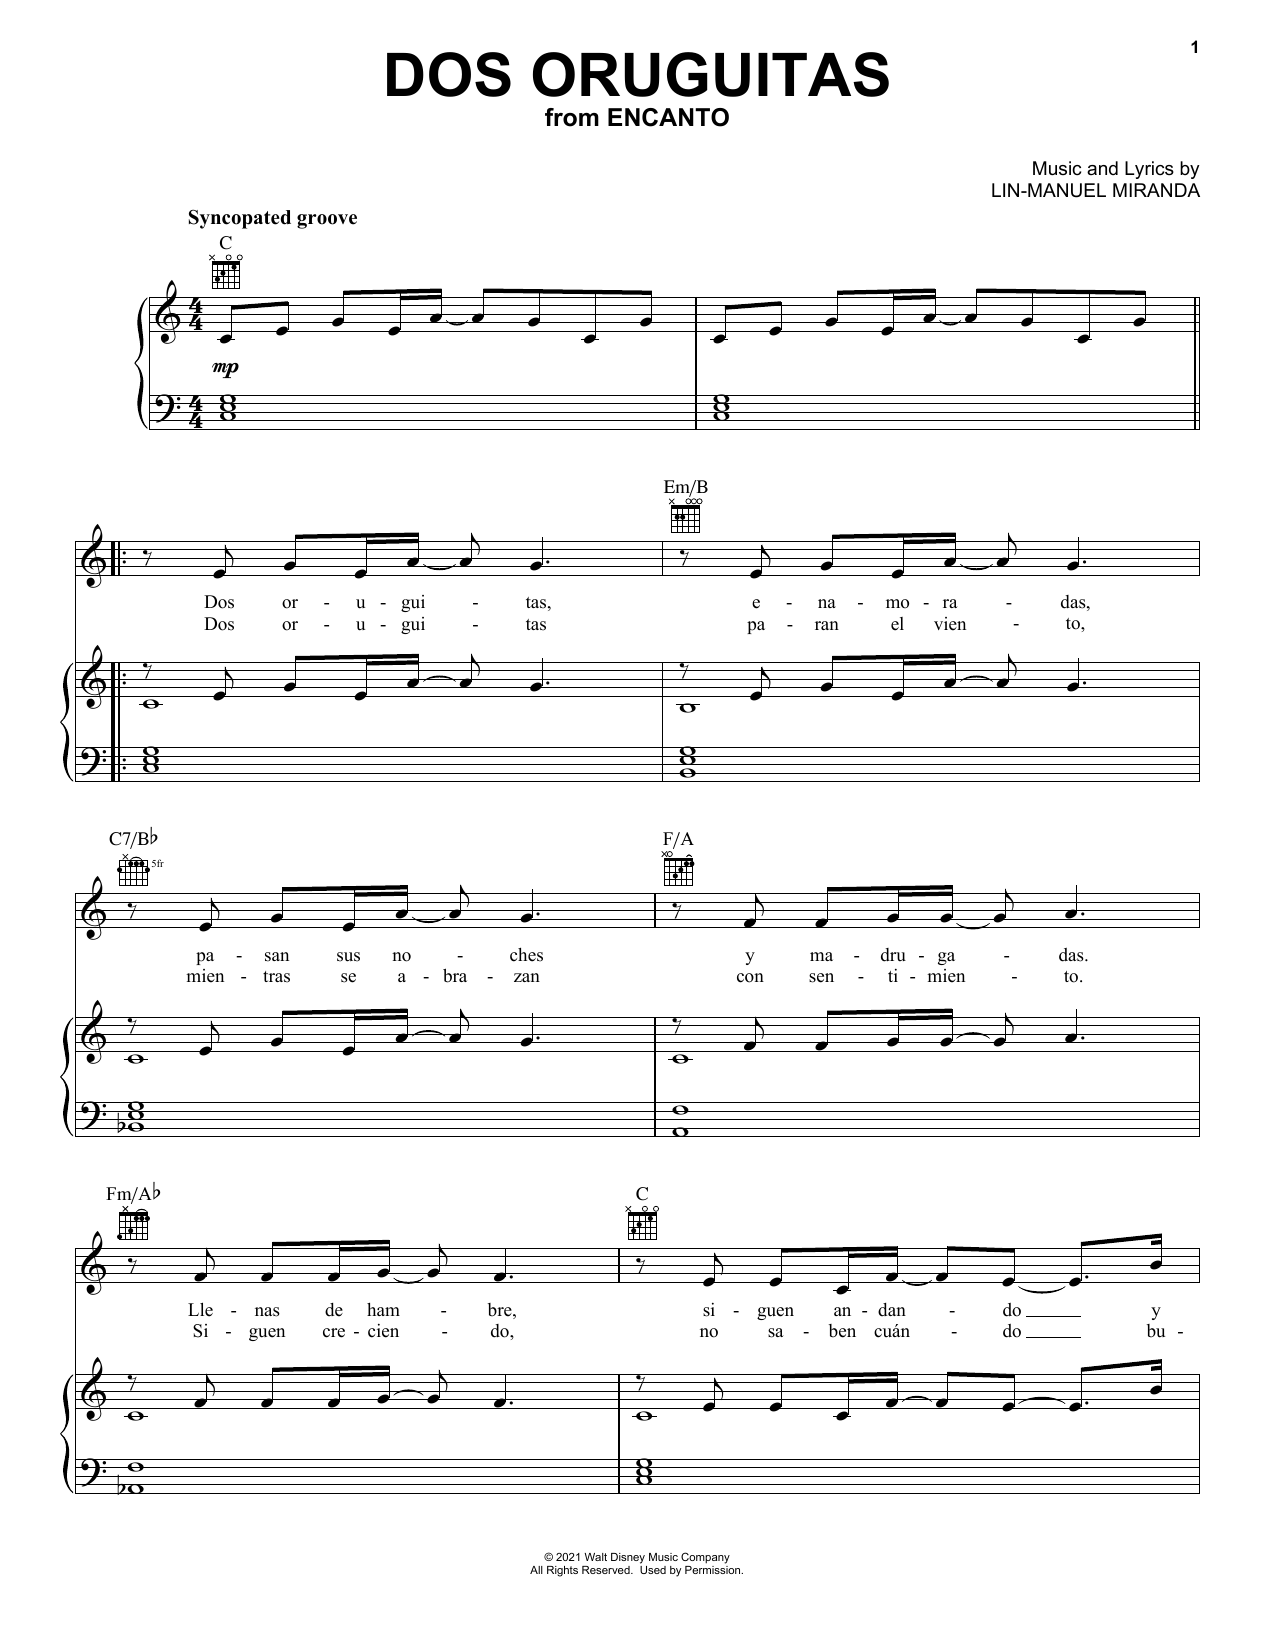 Lin-Manuel Miranda Dos Oruguitas (from Encanto) Sheet Music Notes & Chords for Trumpet Solo - Download or Print PDF